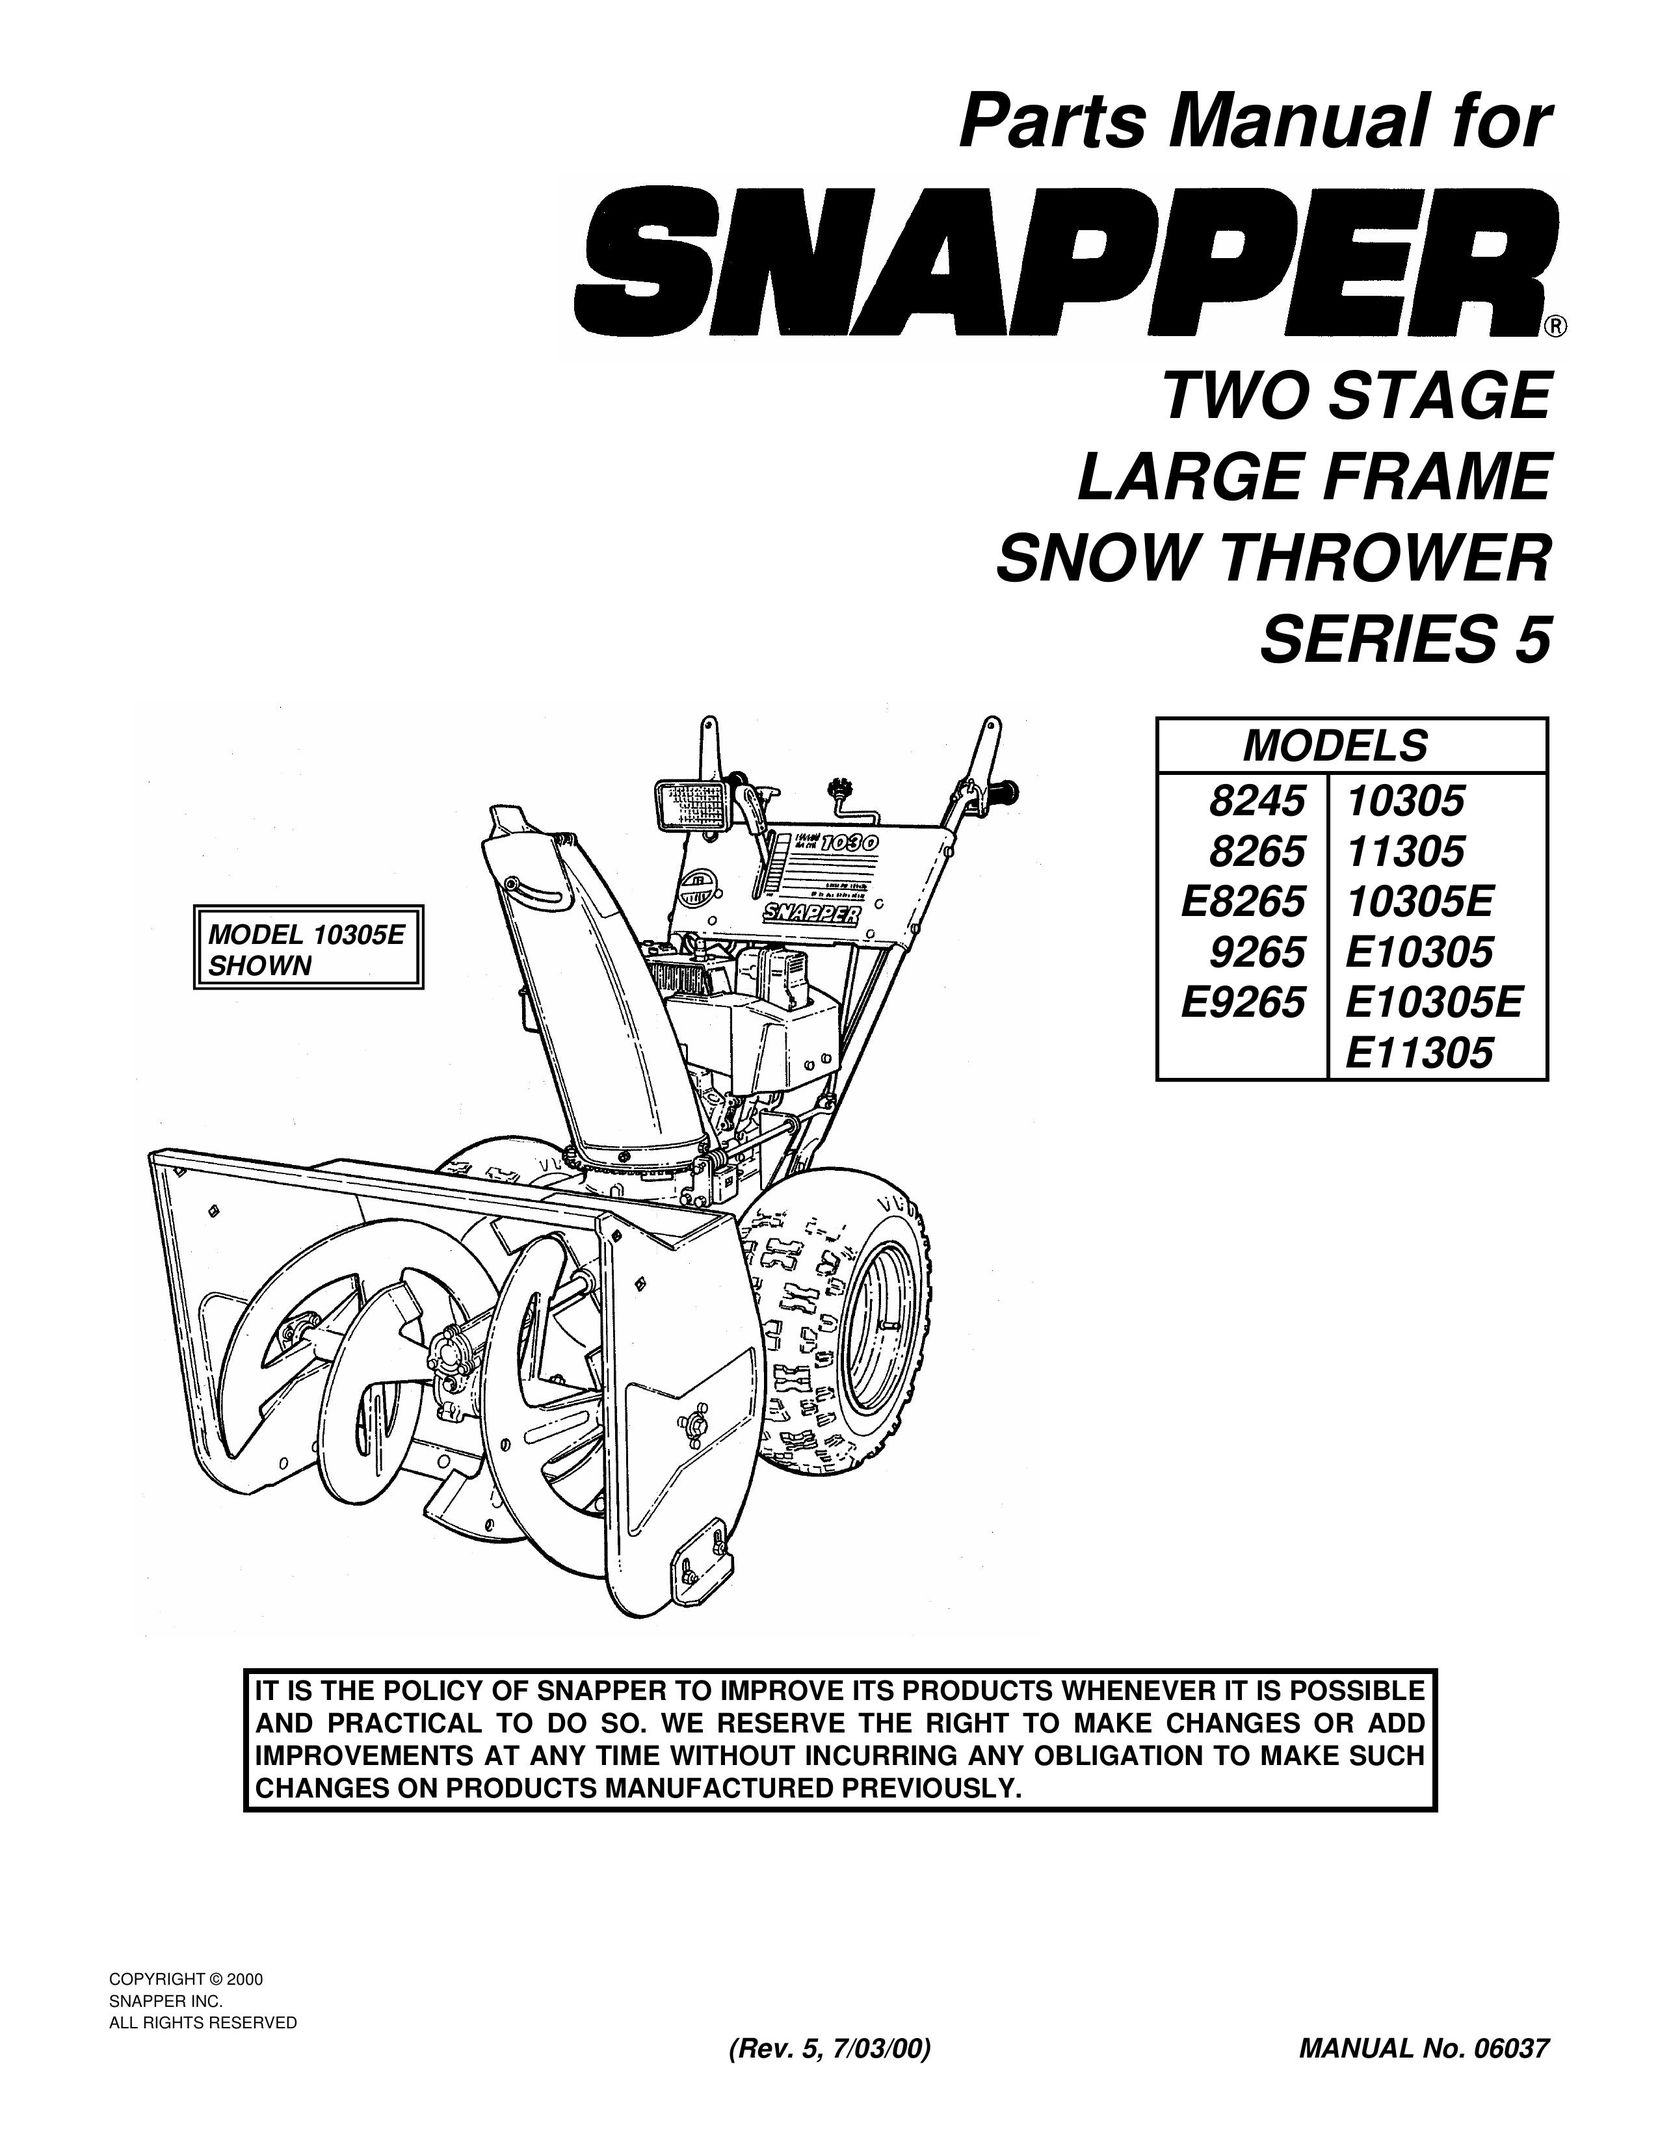 Snapper E11305 VCR User Manual